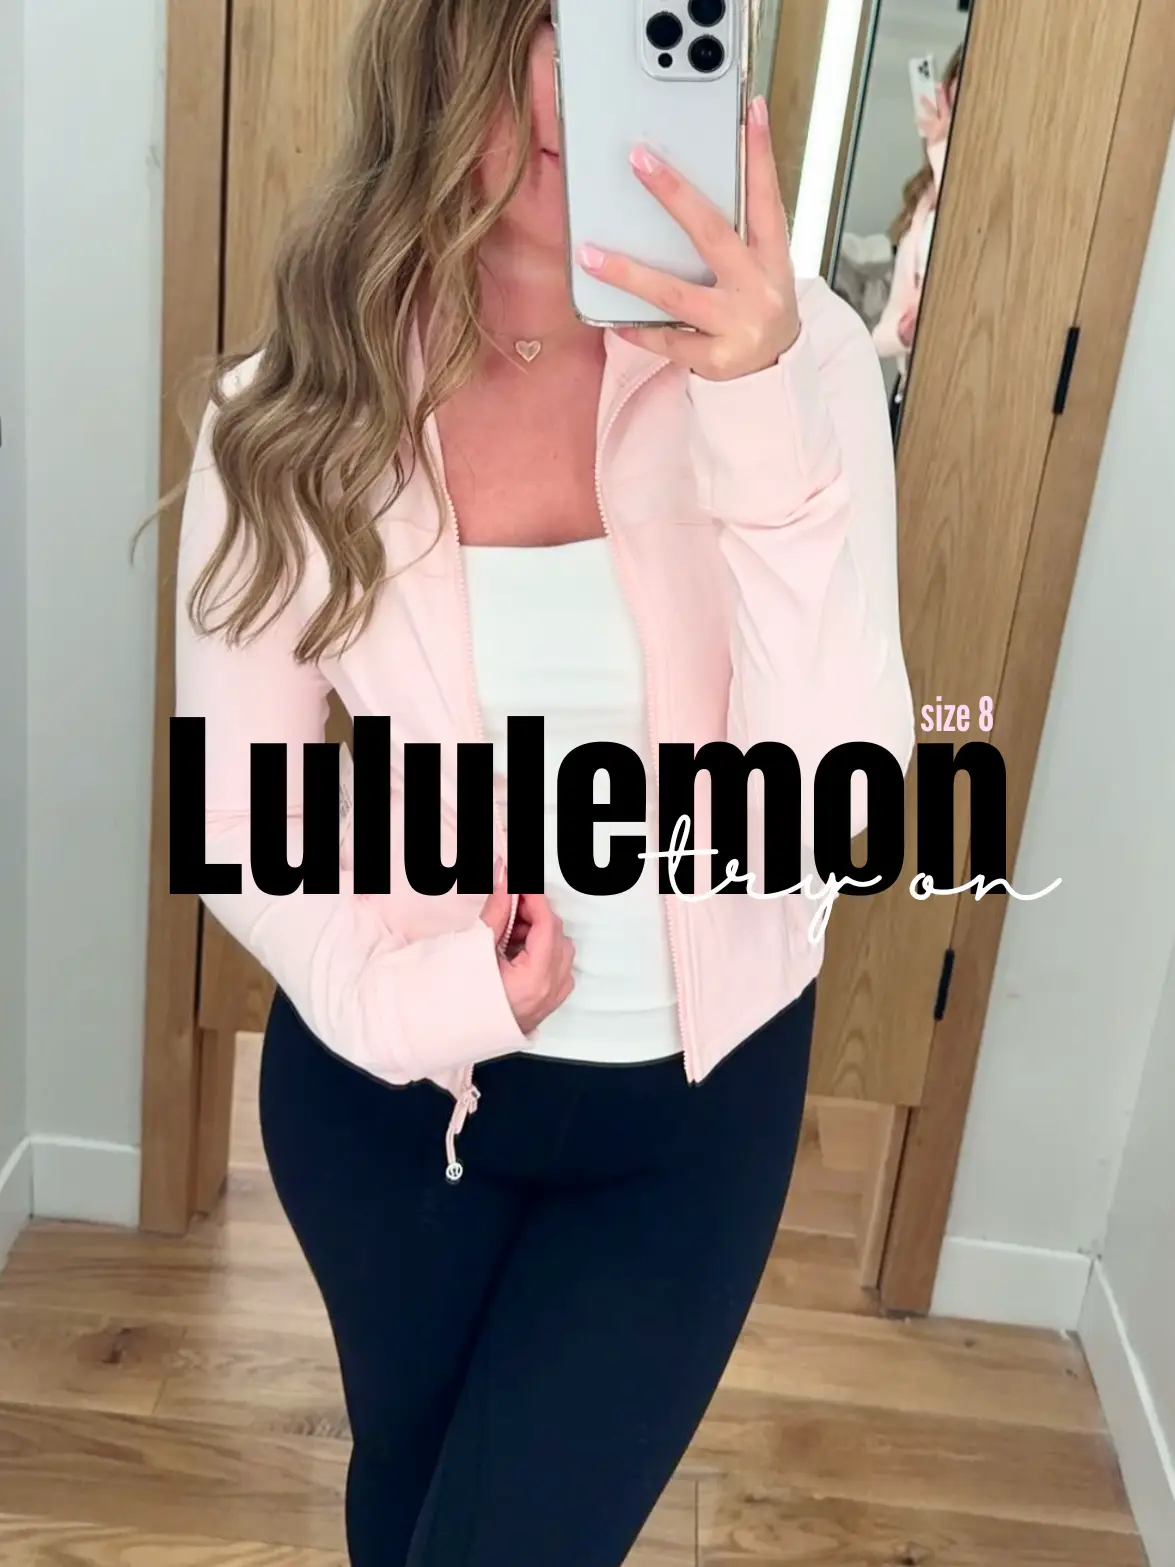 Cheap lululemon Activewear for sale near Reading, Massachusetts, Facebook  Marketplace